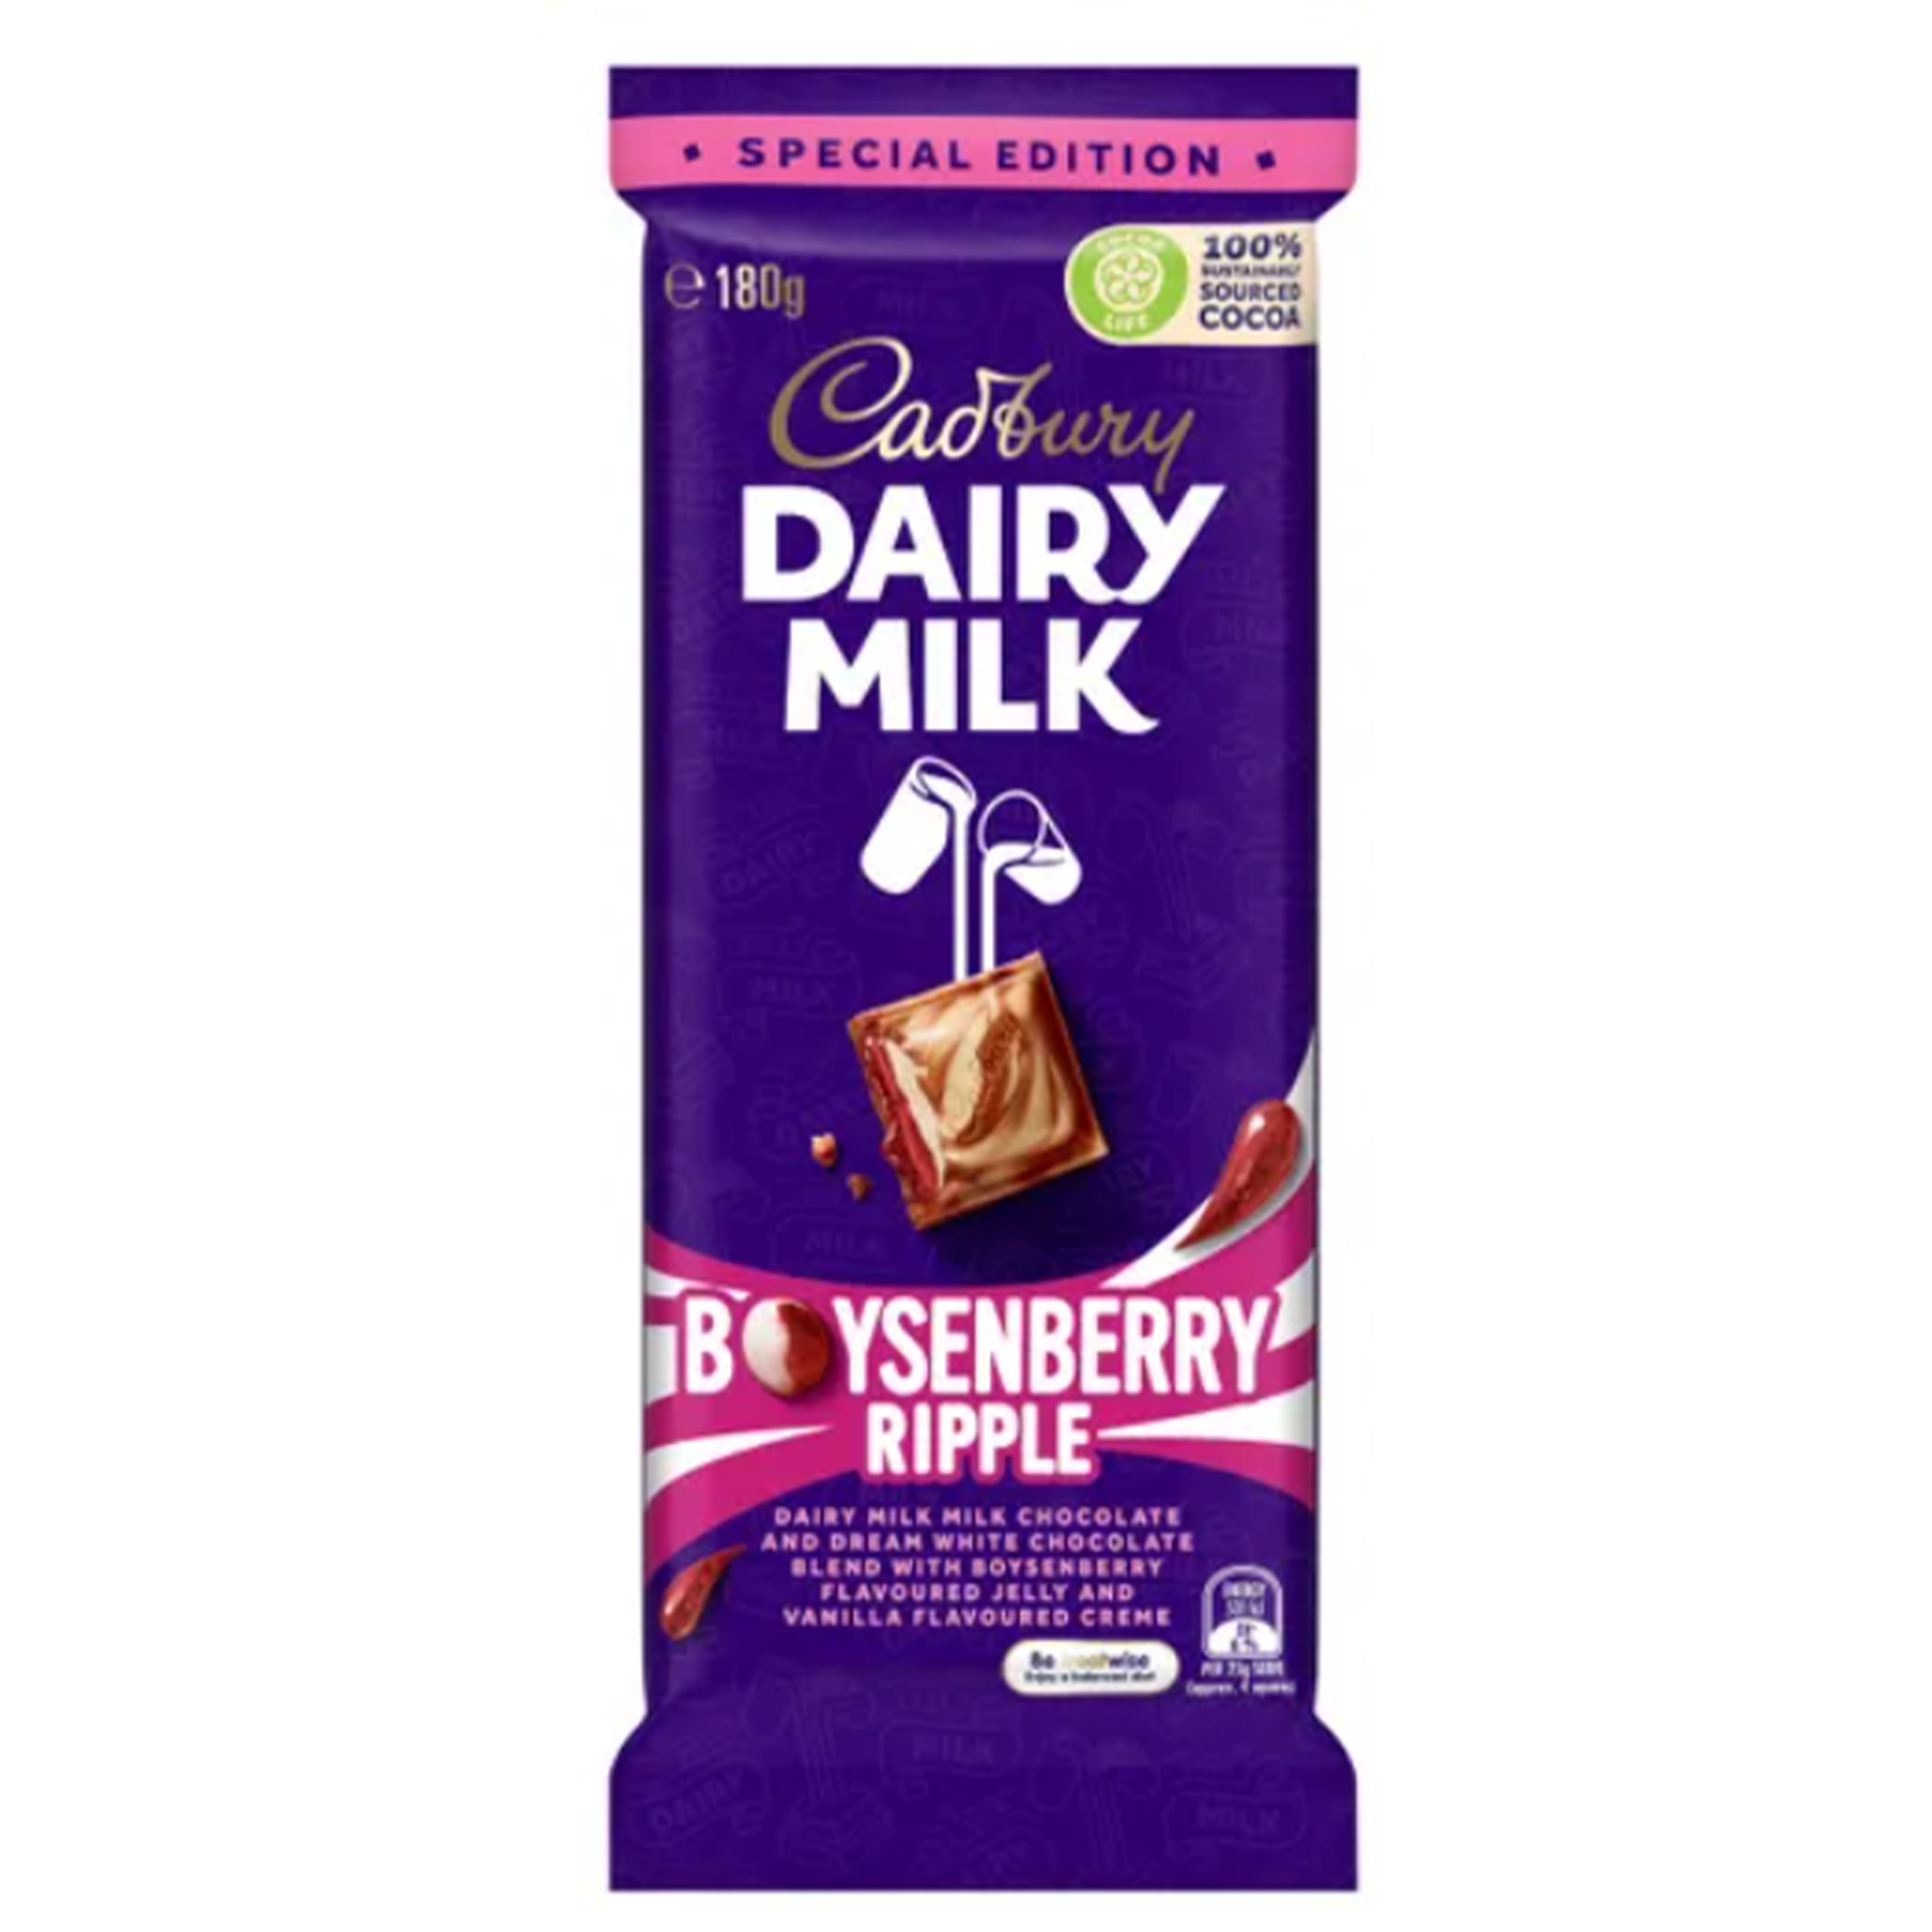 Cadbury Dairy Milk Boysenberry Ripple - Australia